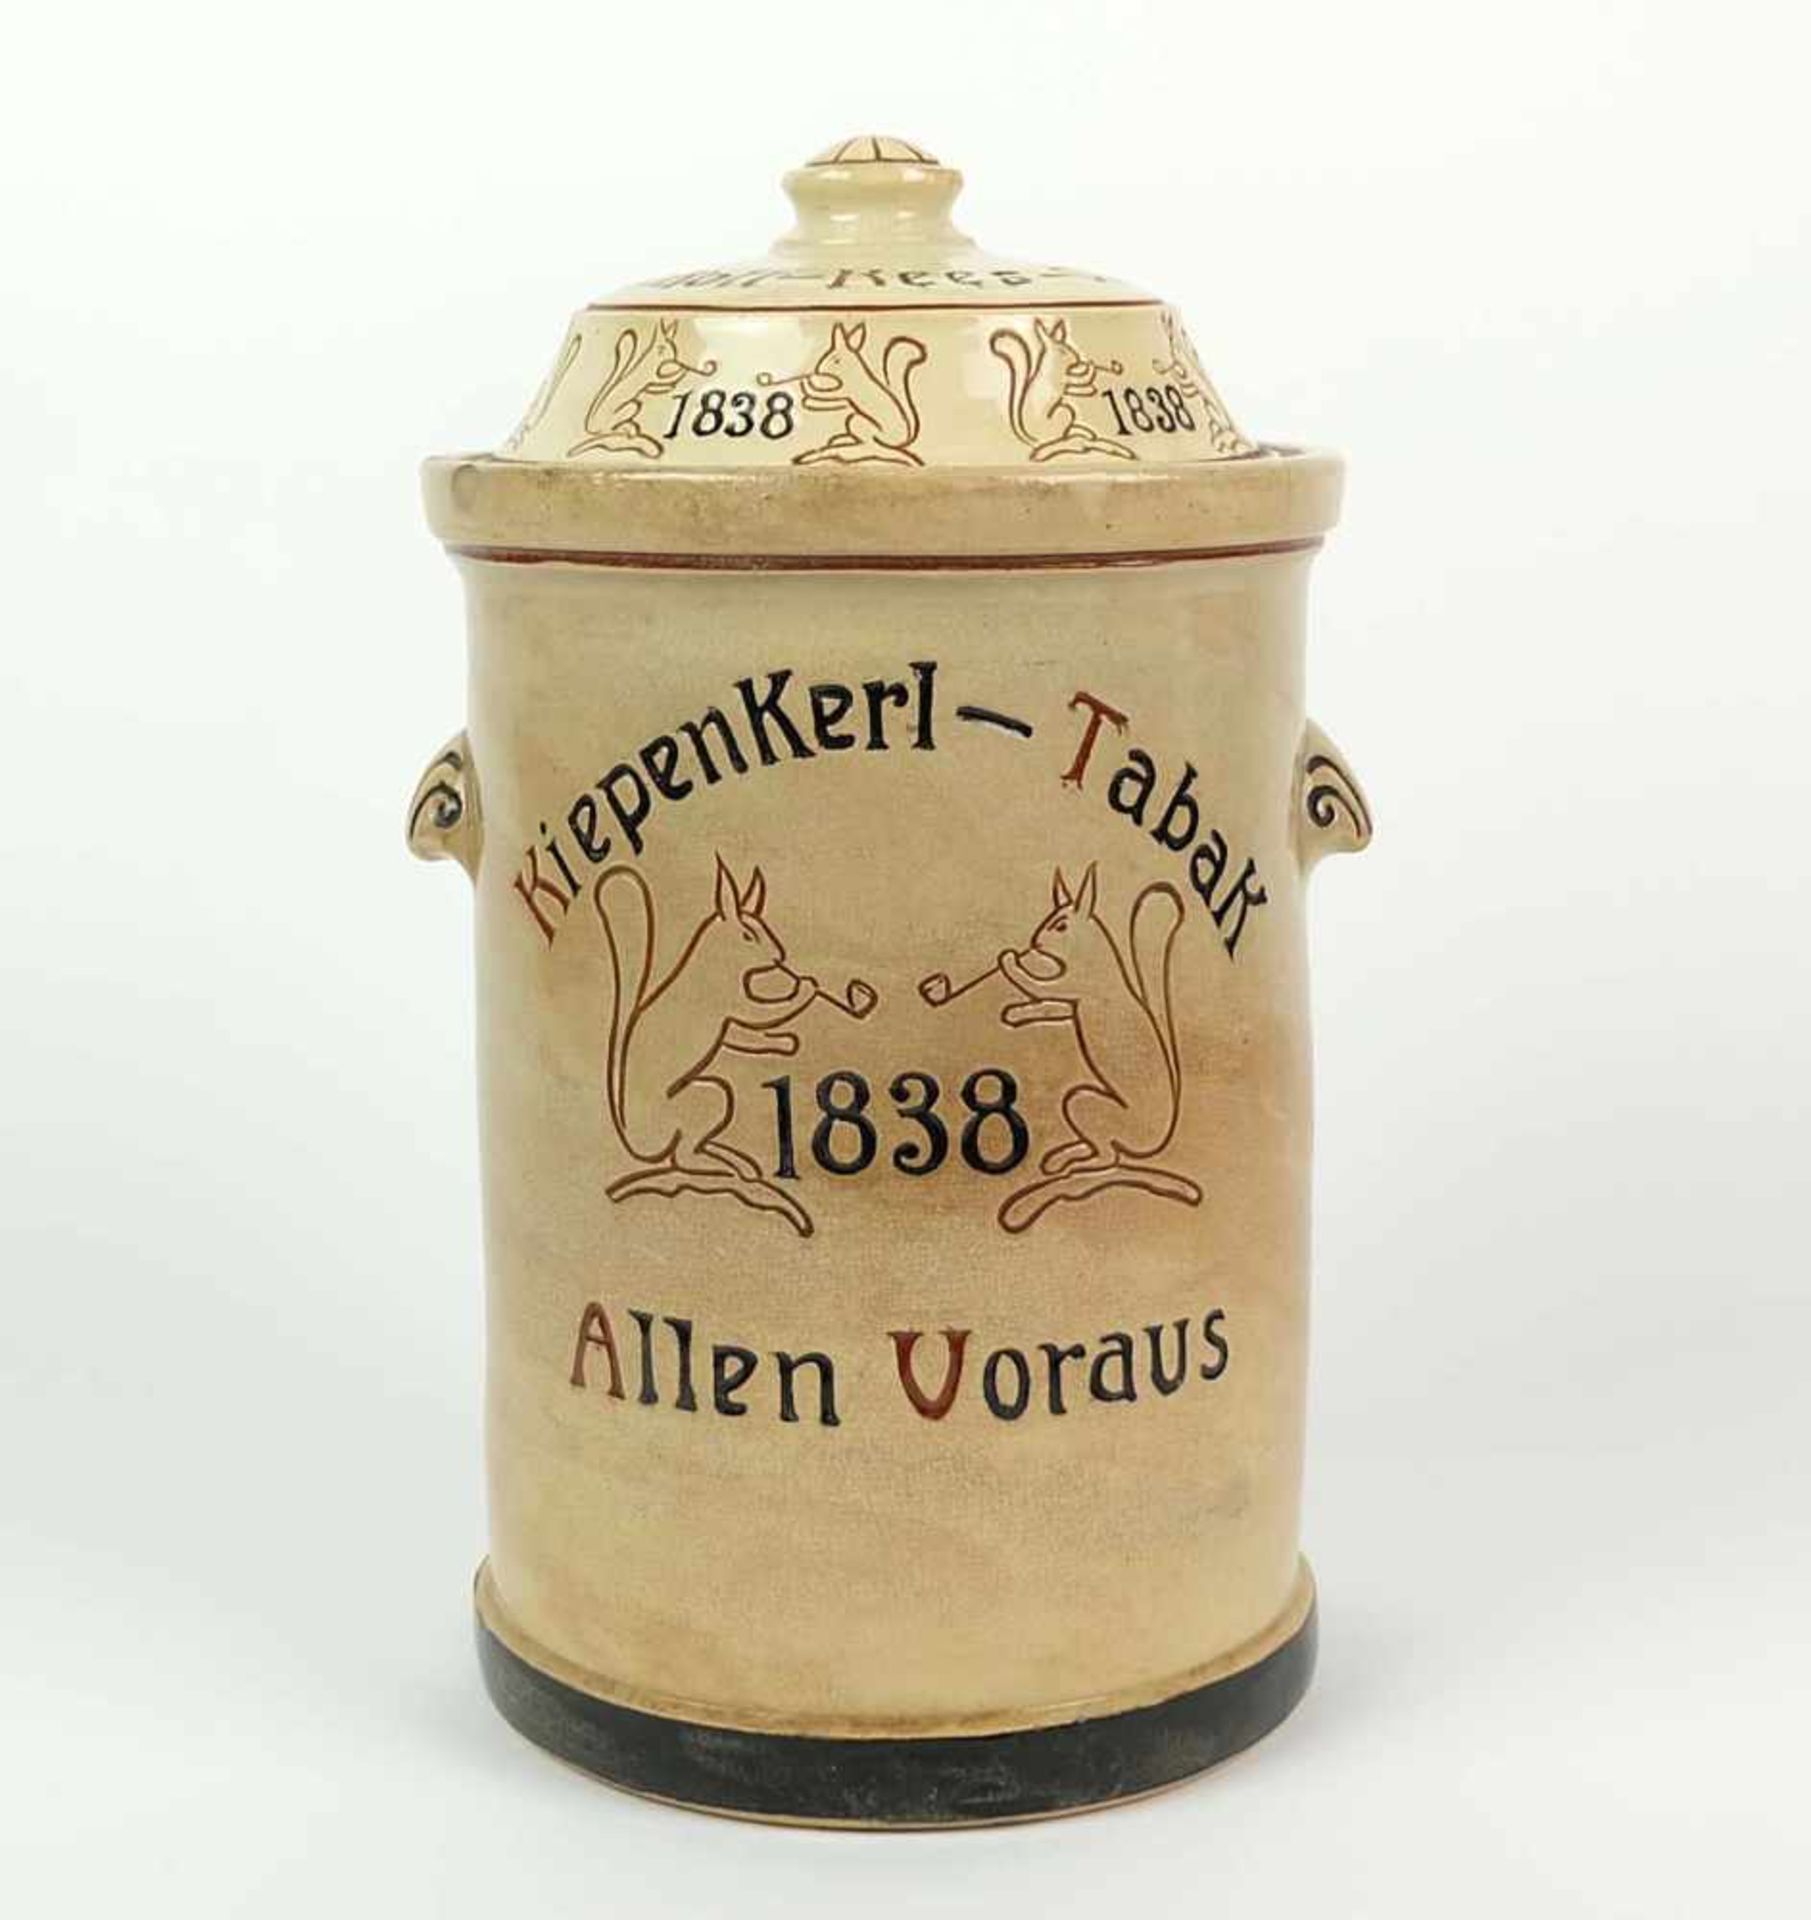 KAUTABAKTOPF, Henric's Oldenkott senior & Comp/ Rees, Jugendstil Epoche, Keramik, zylindrische Form,